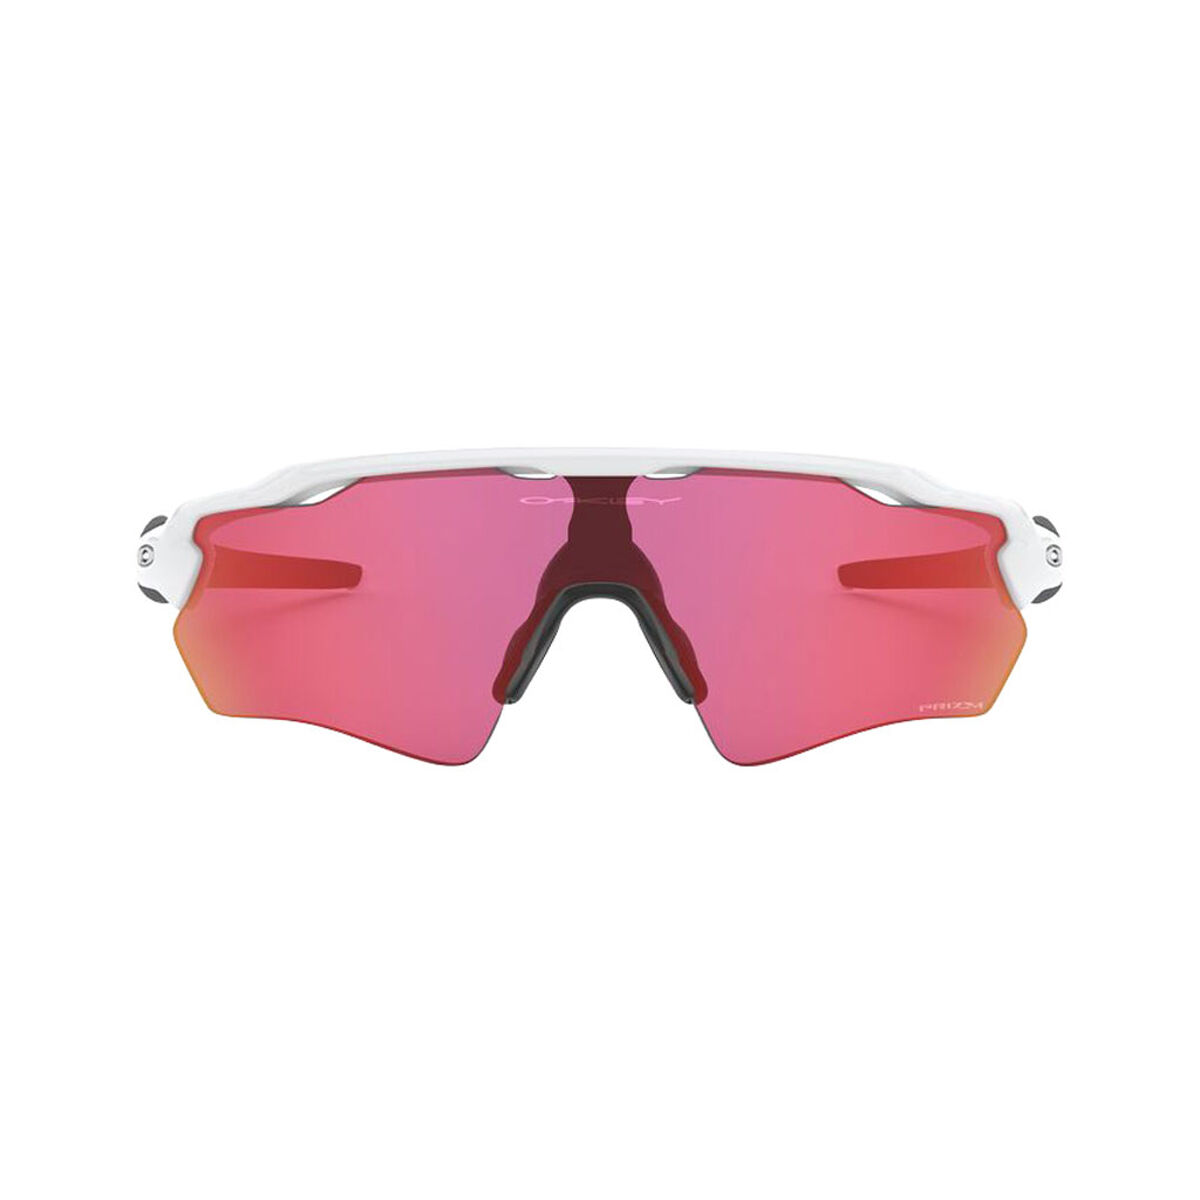 Adidas SP0008 Polarized 52H Sunglasses Dark Tortoise | SmartBuyGlasses India